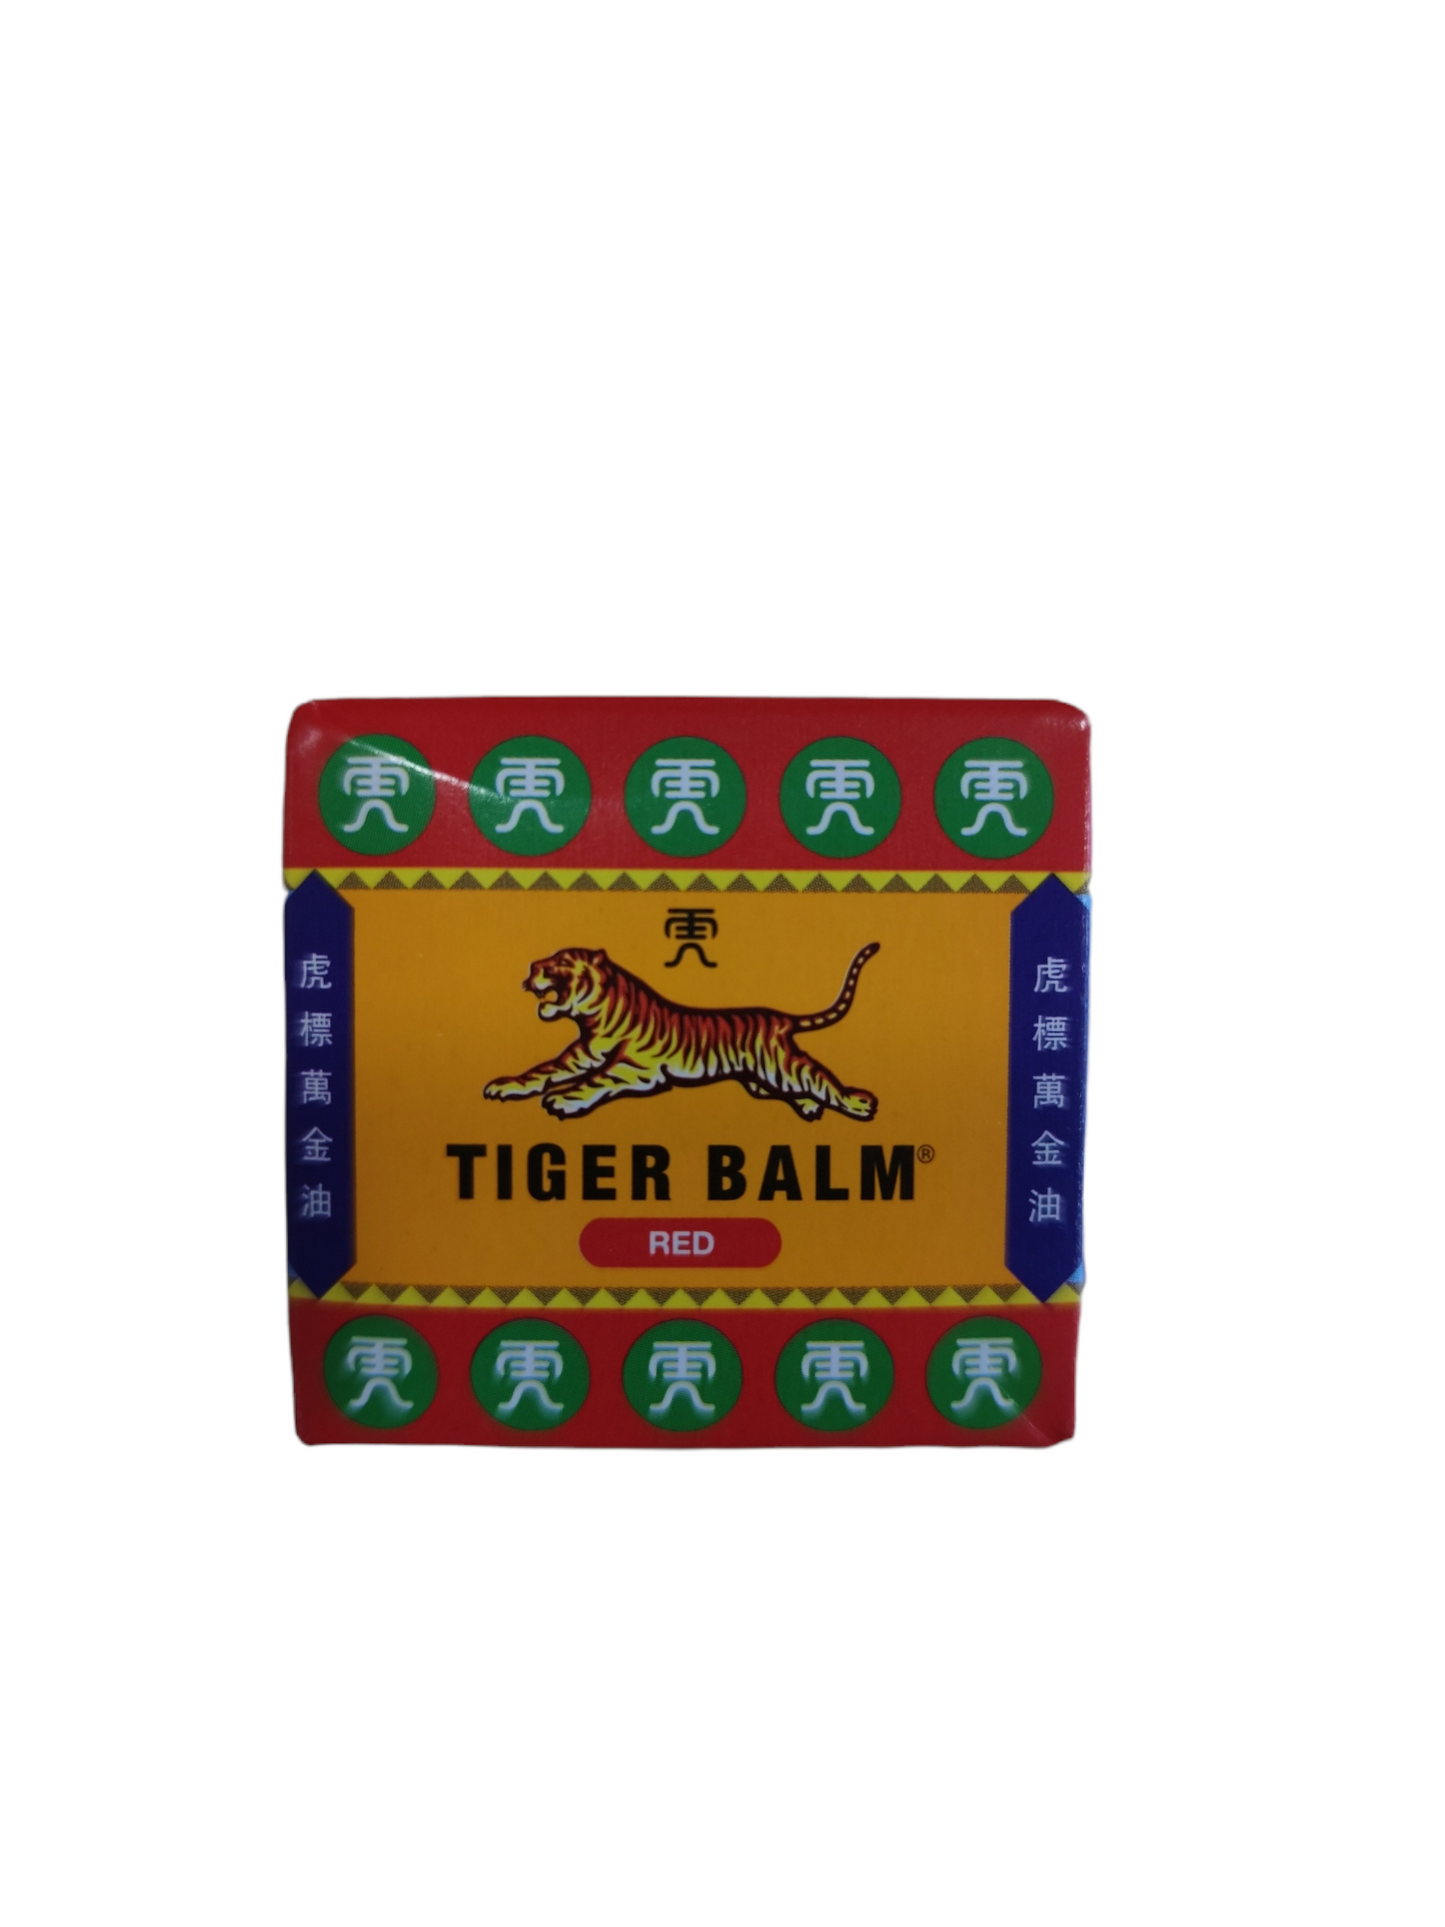 Tiger Balm - Red 19g 虎標萬金油